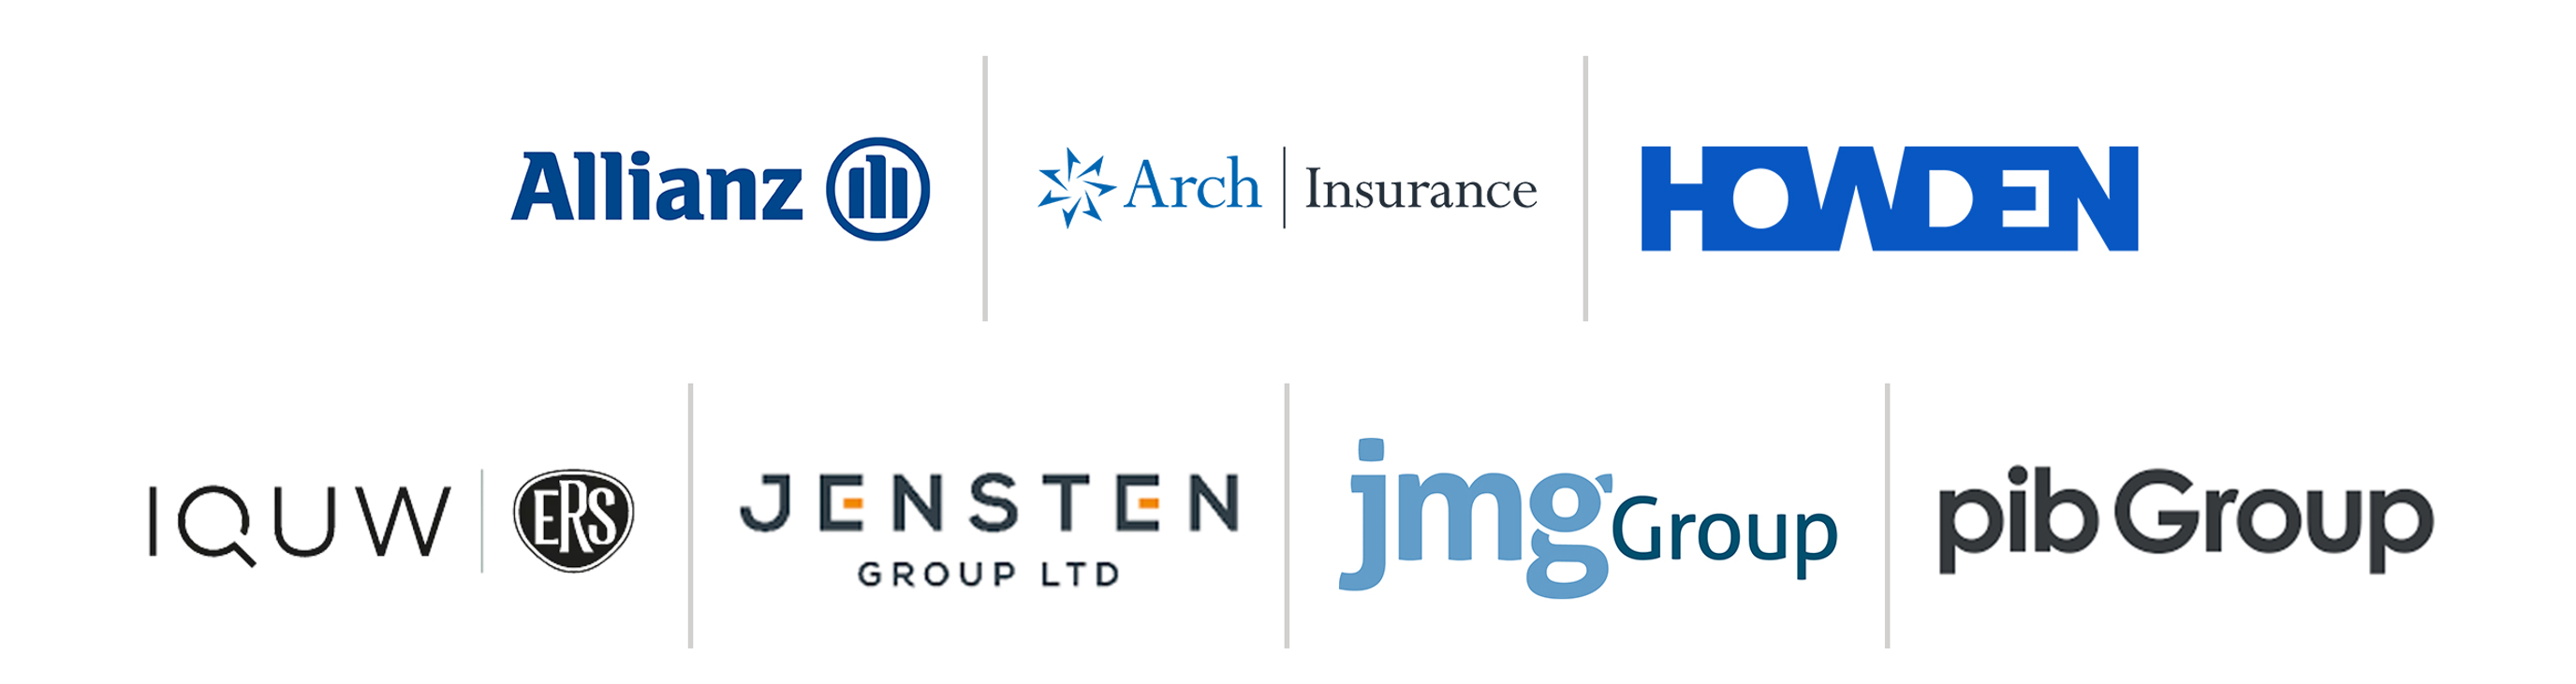 CGI's Insurance client logos